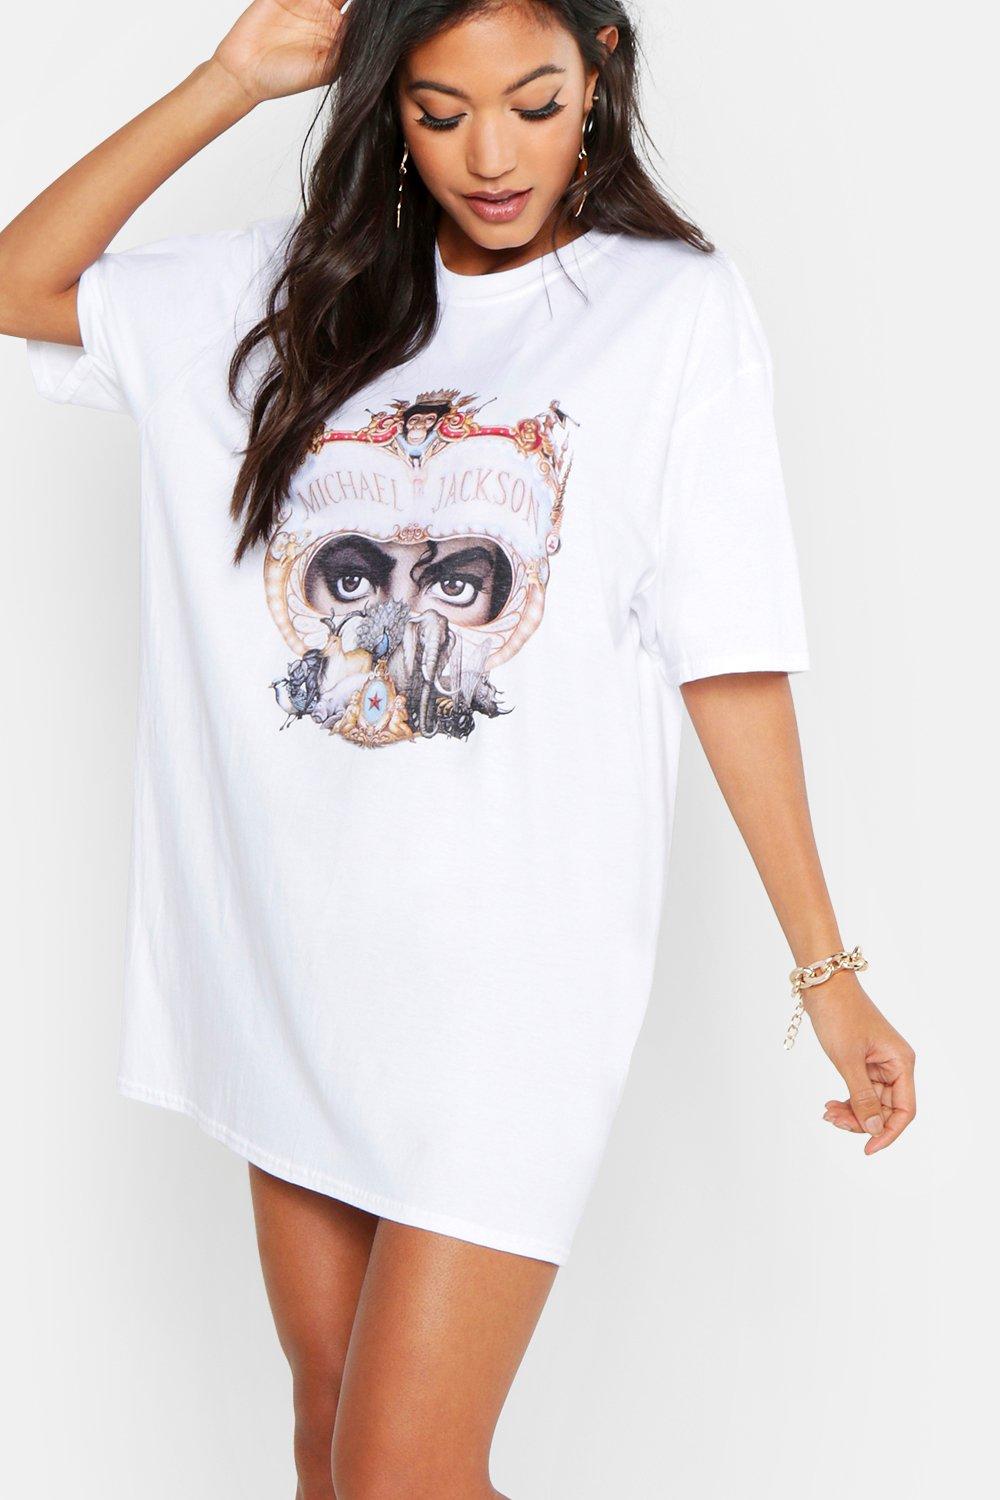 Michael Jackson Dangerous Tour Womens T-Shirt – Crazy Awesome Socks